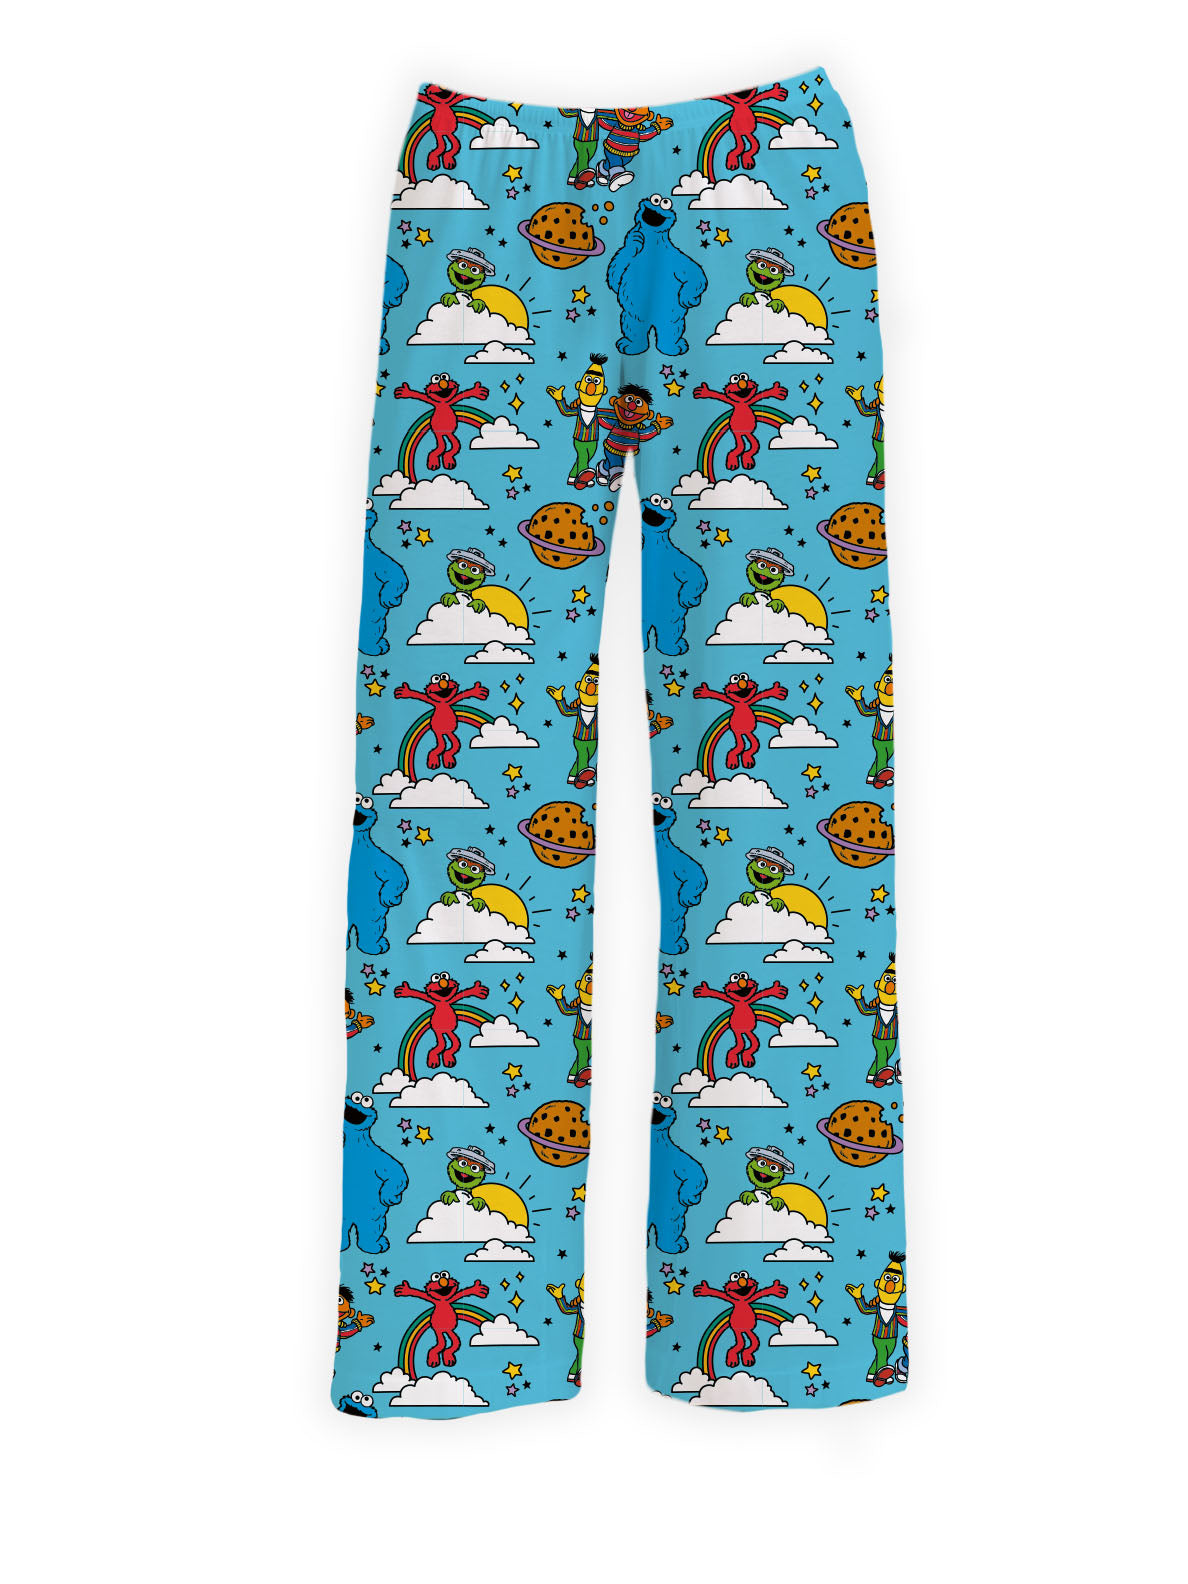 BRIEF INSANITY Sesame Street Characters Pajama Lounge Pants